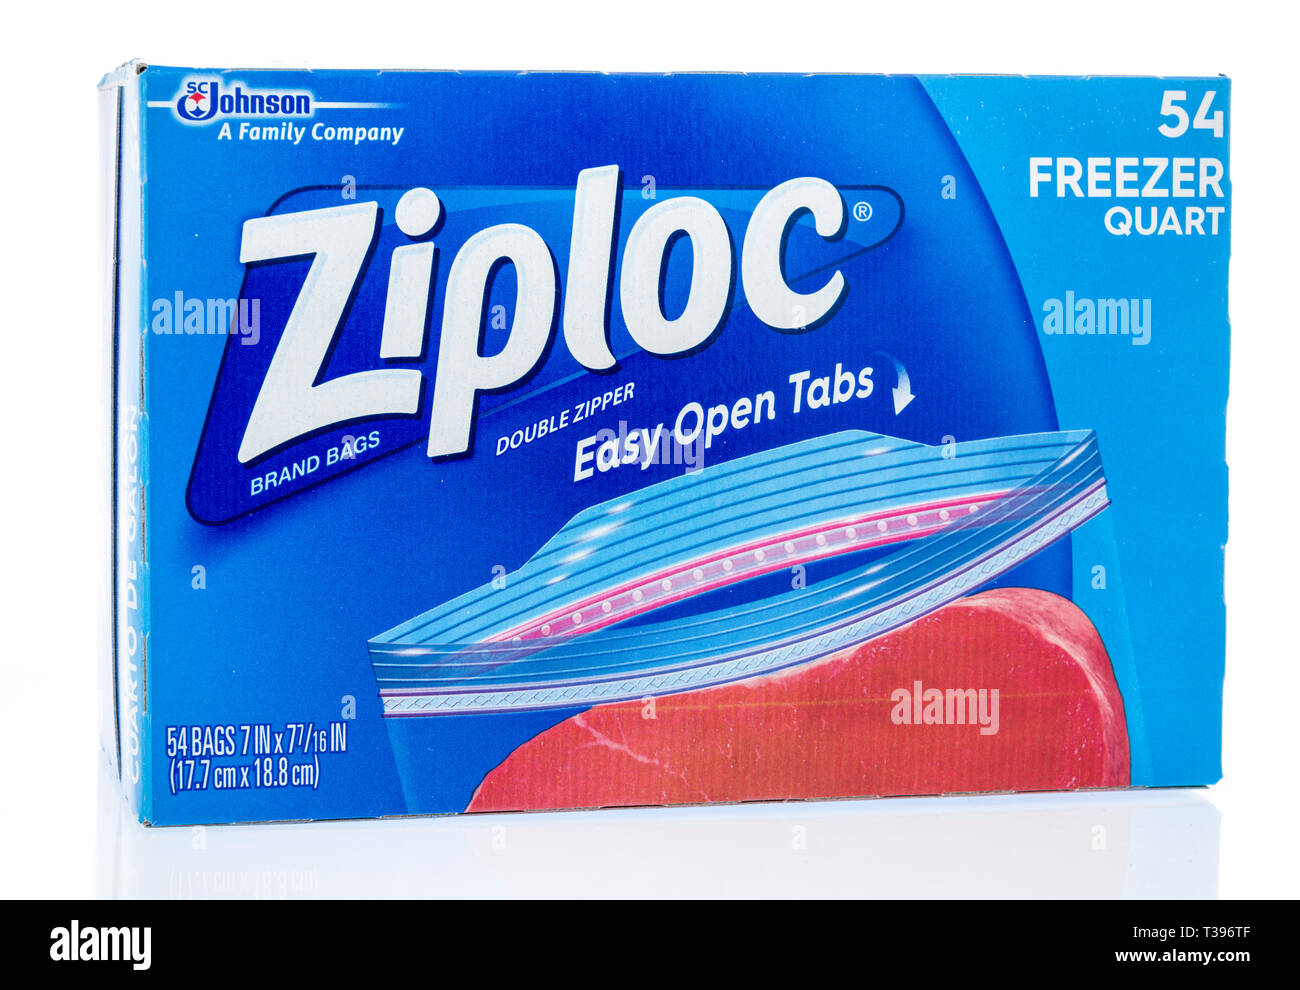 Ziploc Limited Edt Holiday Slider Storage Bags Red Quart, 20 each